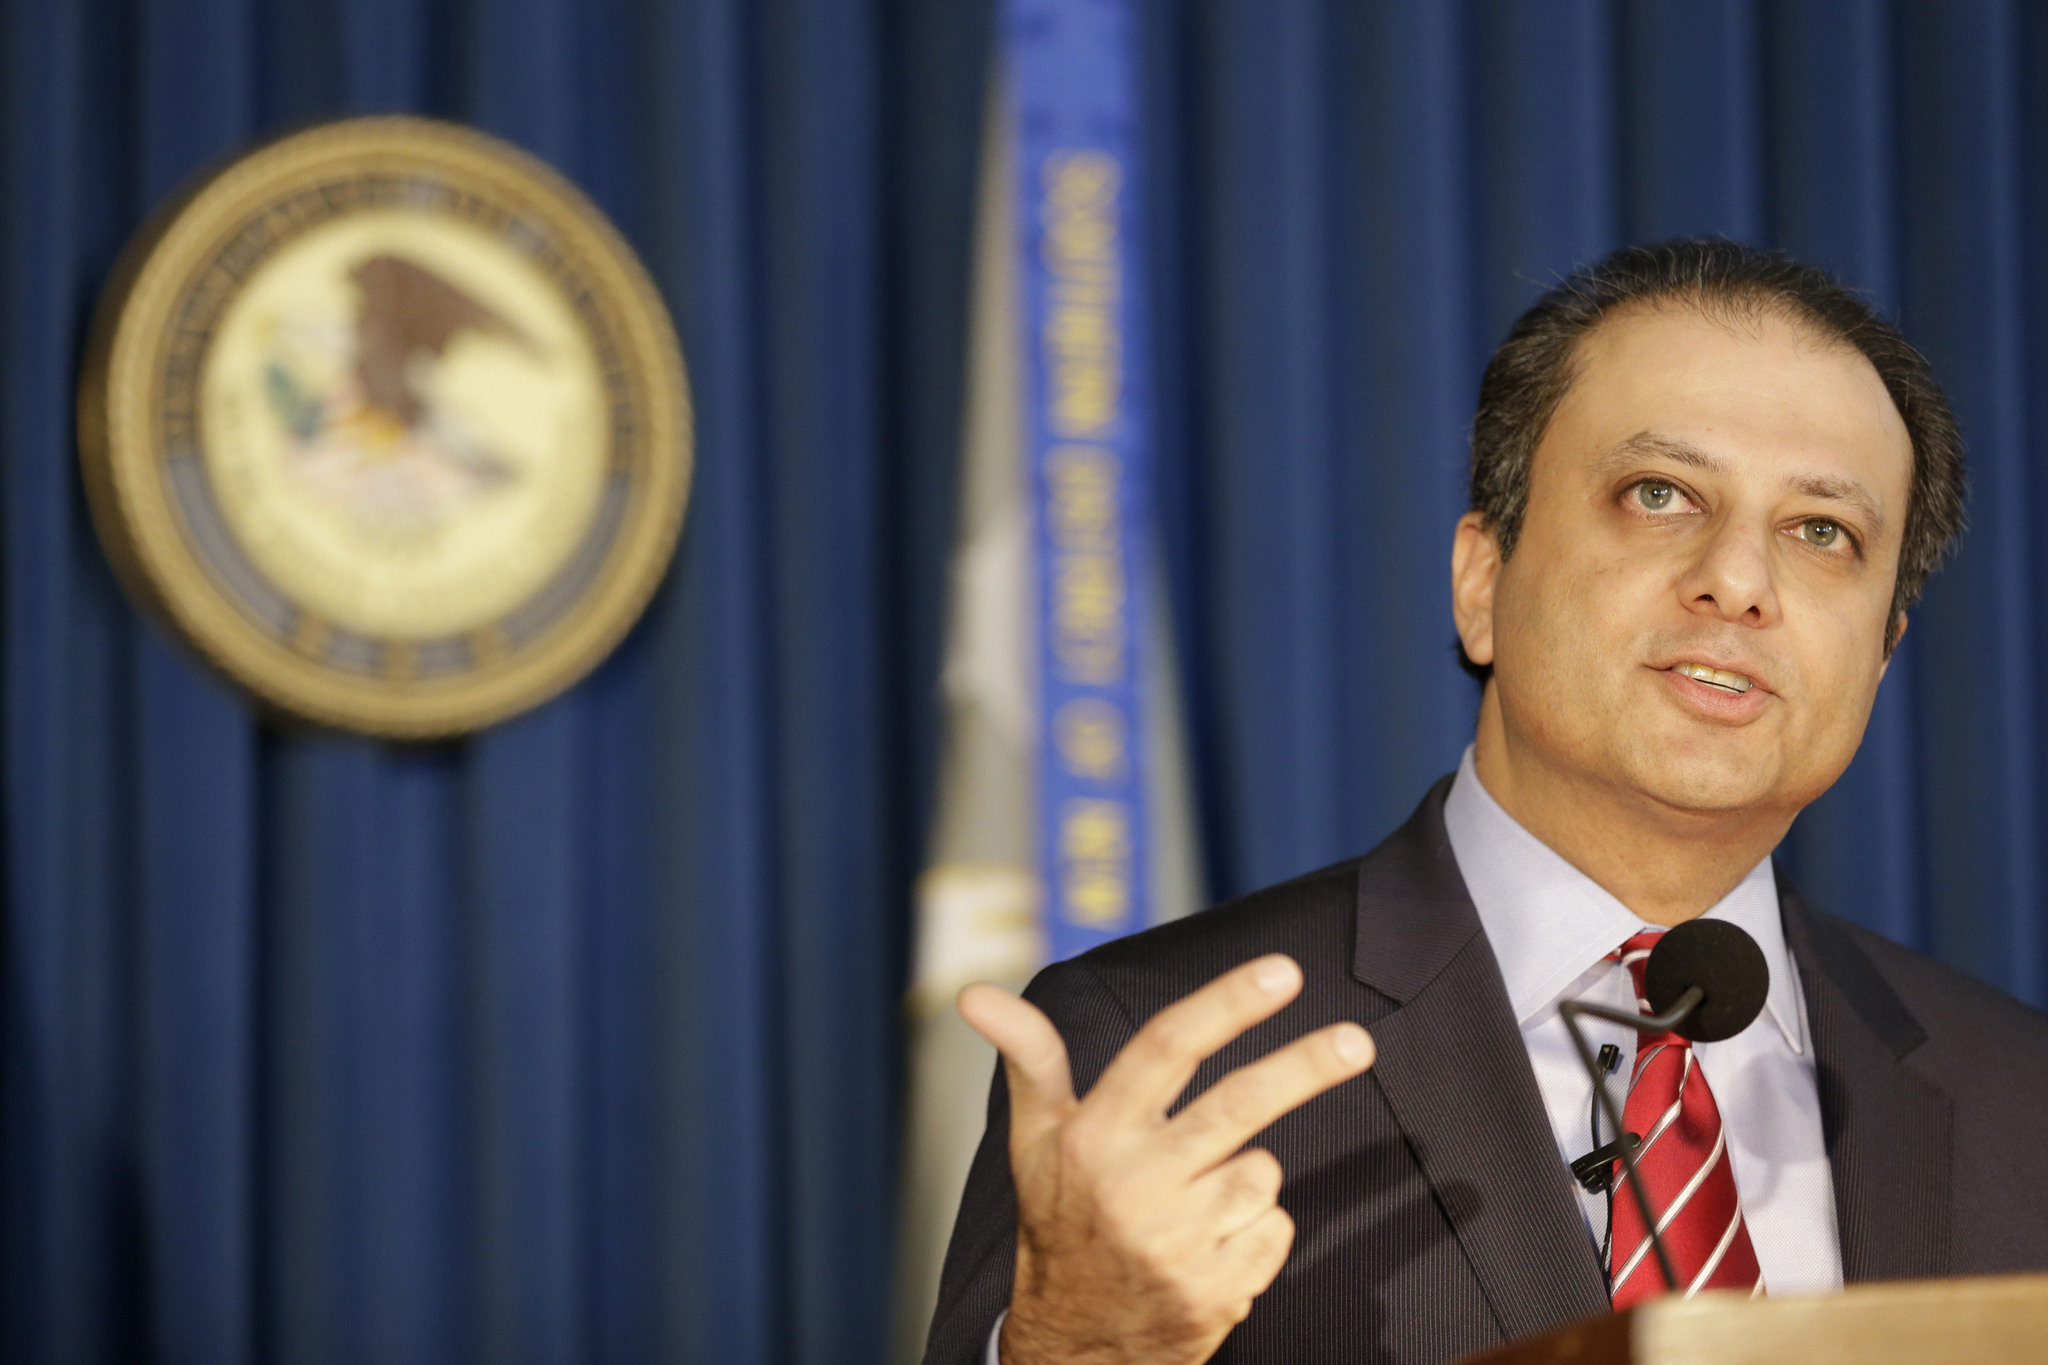 Fired US Attorney Bharara backs Democratic Ohio AG candidate